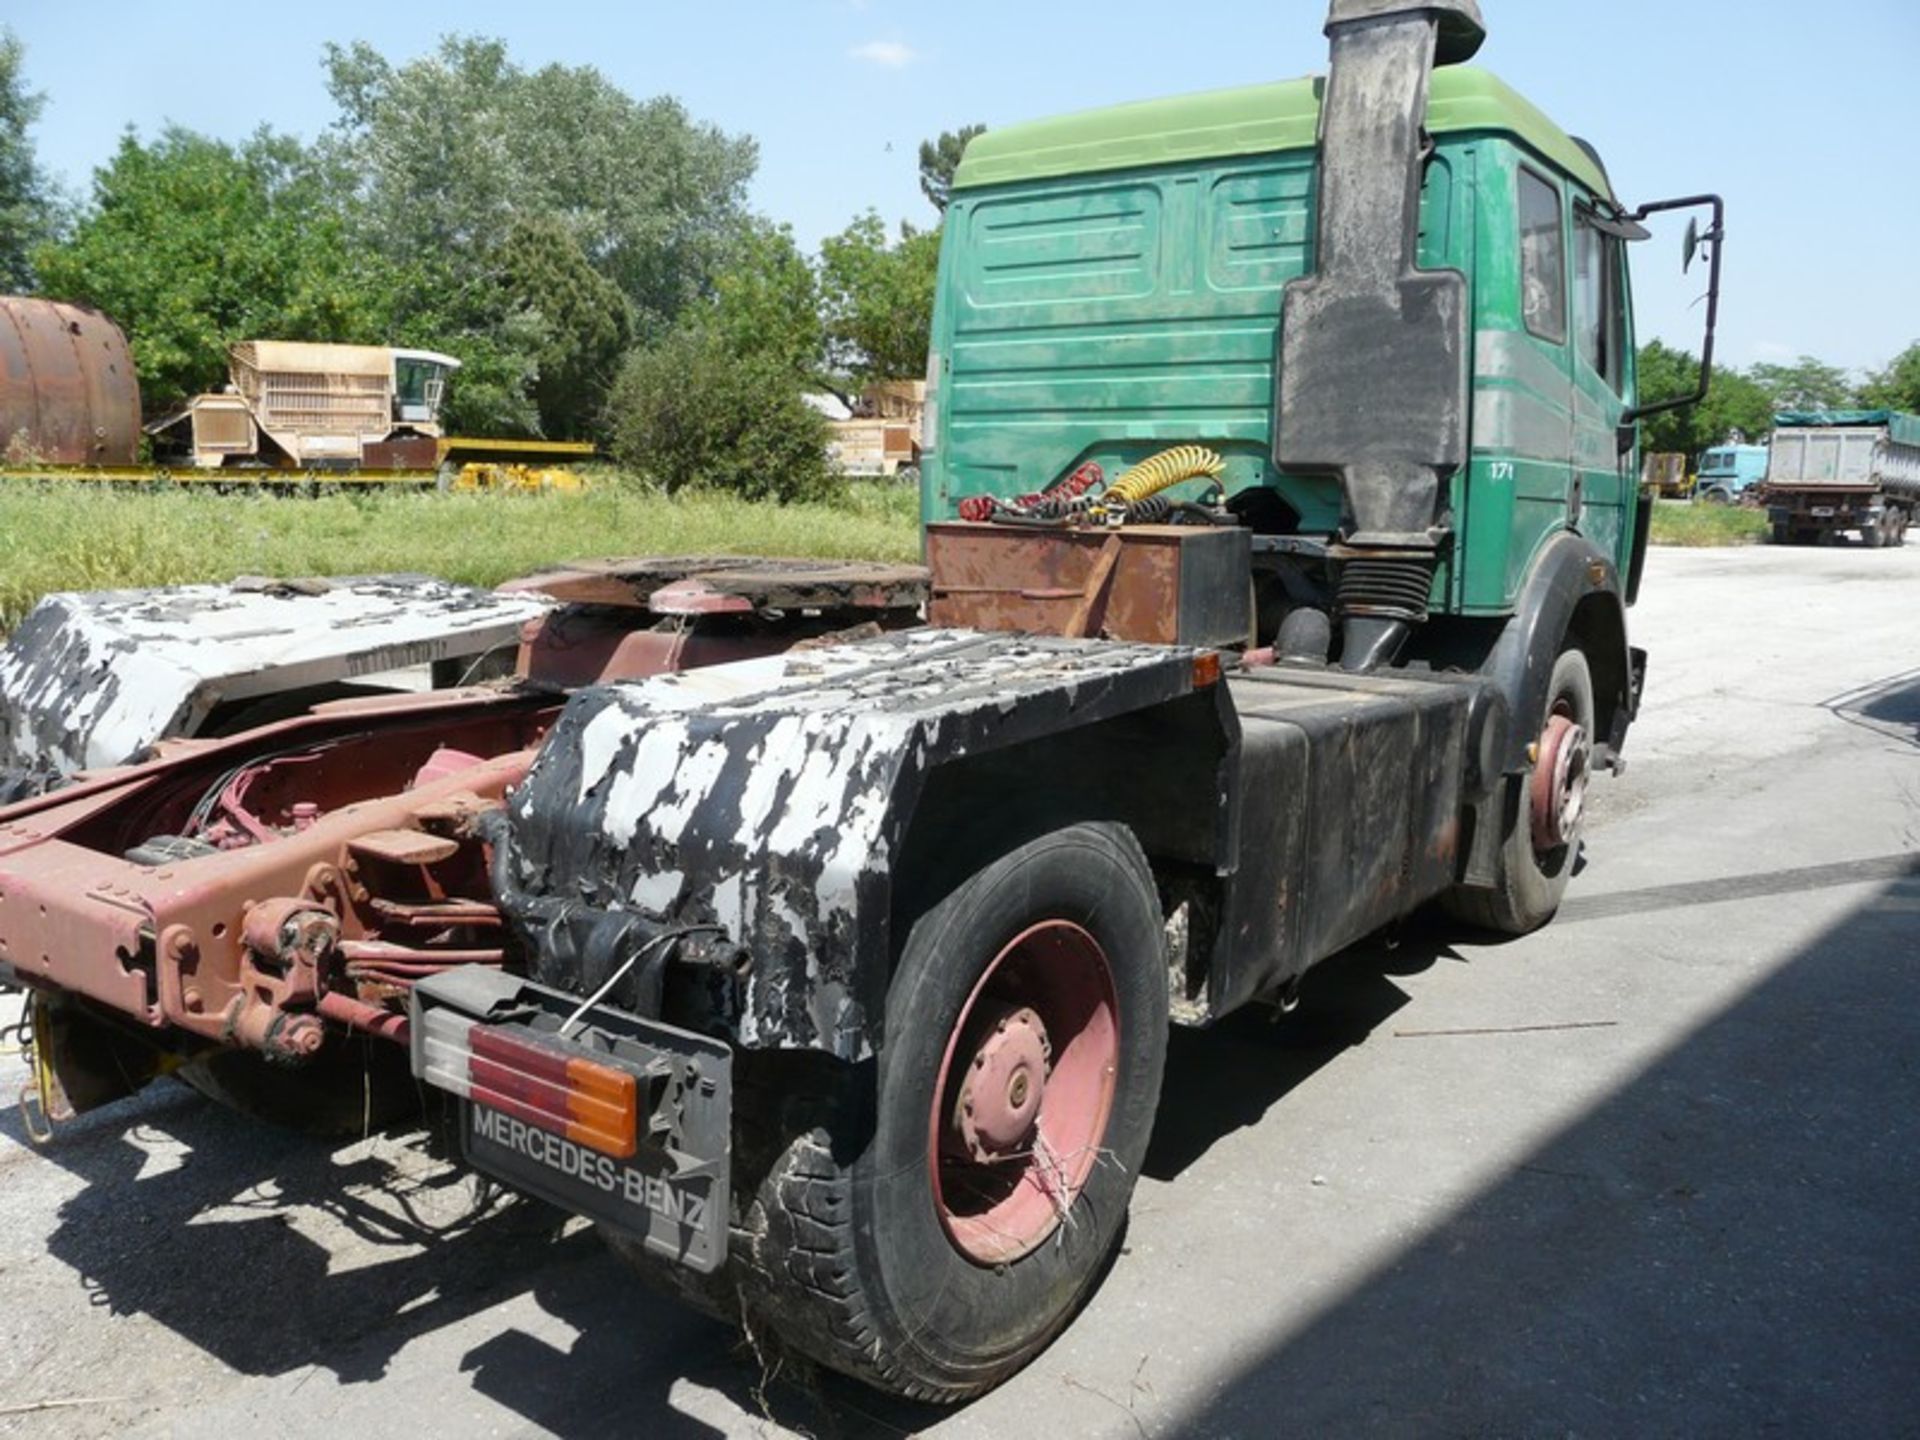 Tractor MERCEDES 1735, KM 183750, REG NBN 8221 (Located in Greece - Plati Imathias) Greek - Image 4 of 6